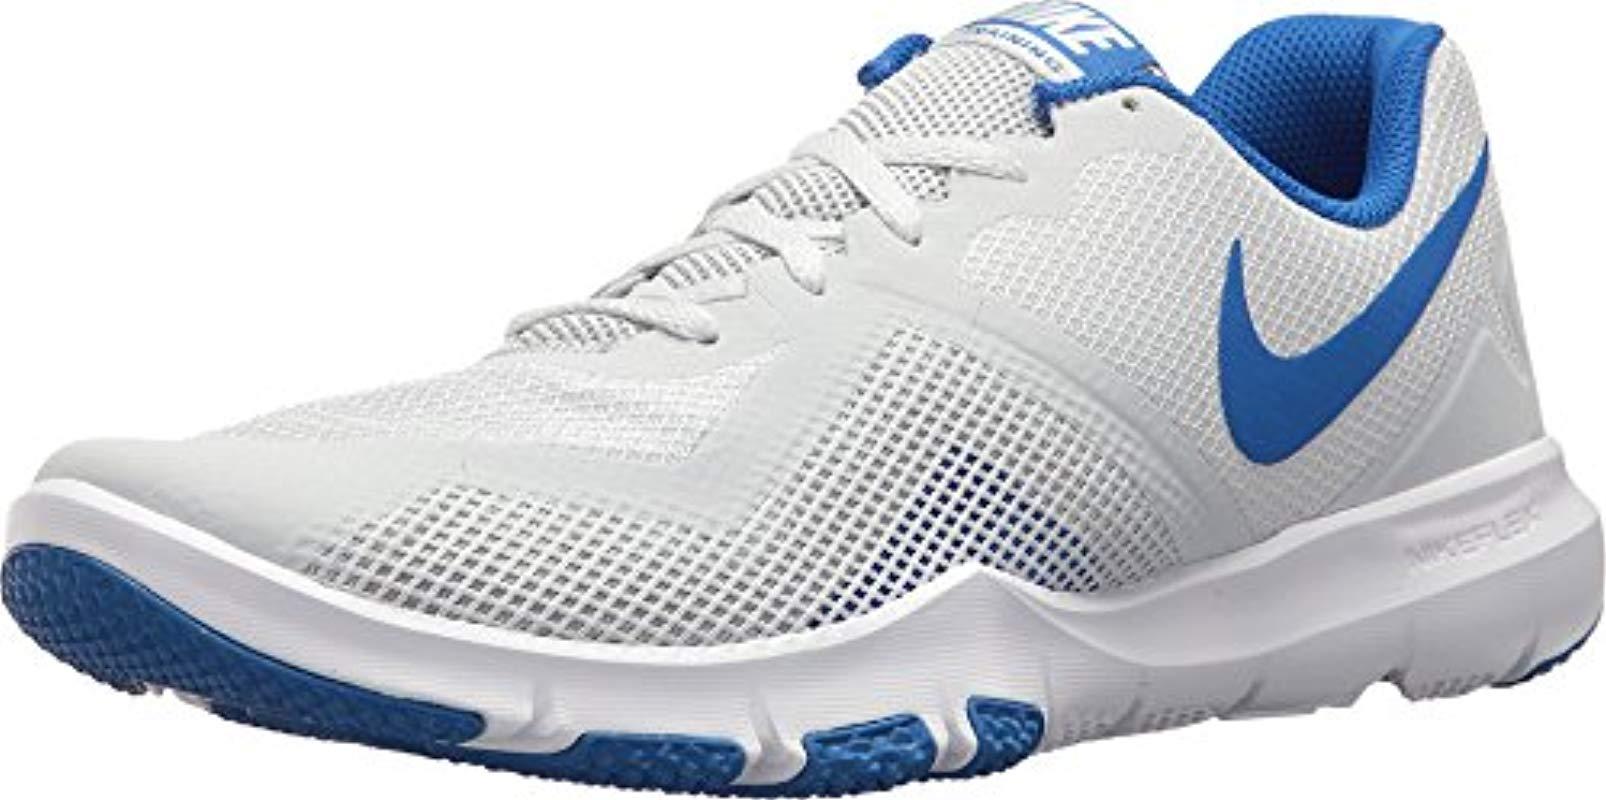 Nike Flex Control Ii Cross Trainer in Blue for Men - Save 43% - Lyst